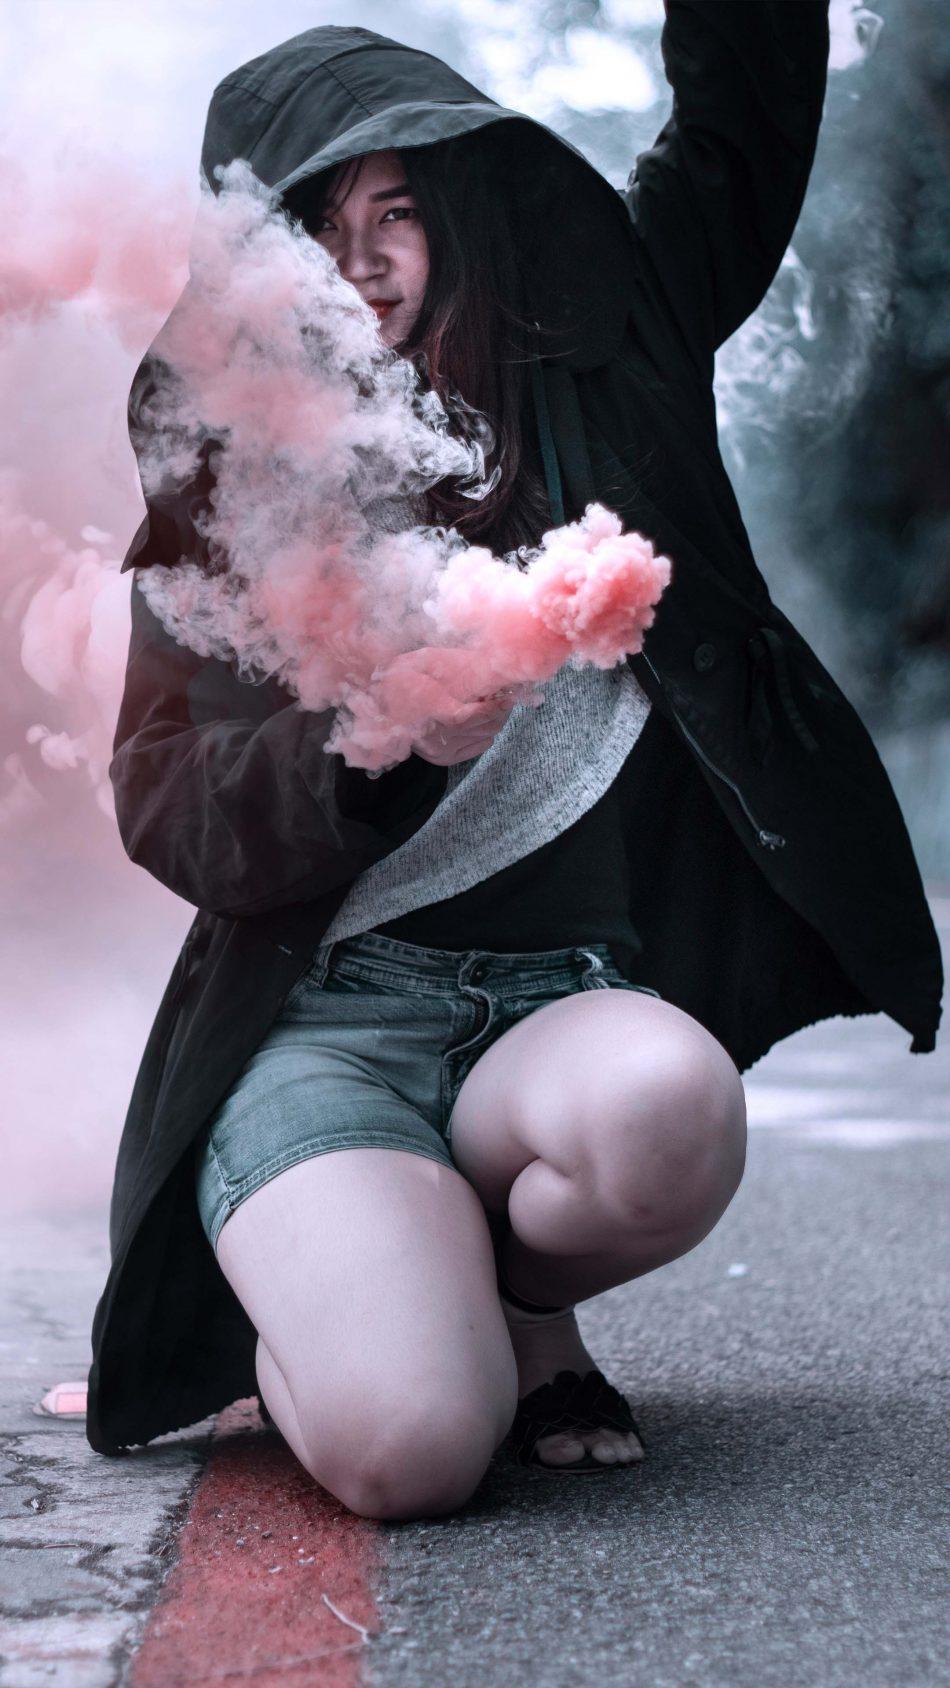 Girl Hoodie Colorful Smoke Bombs Street Portrait 4k Ultra HD